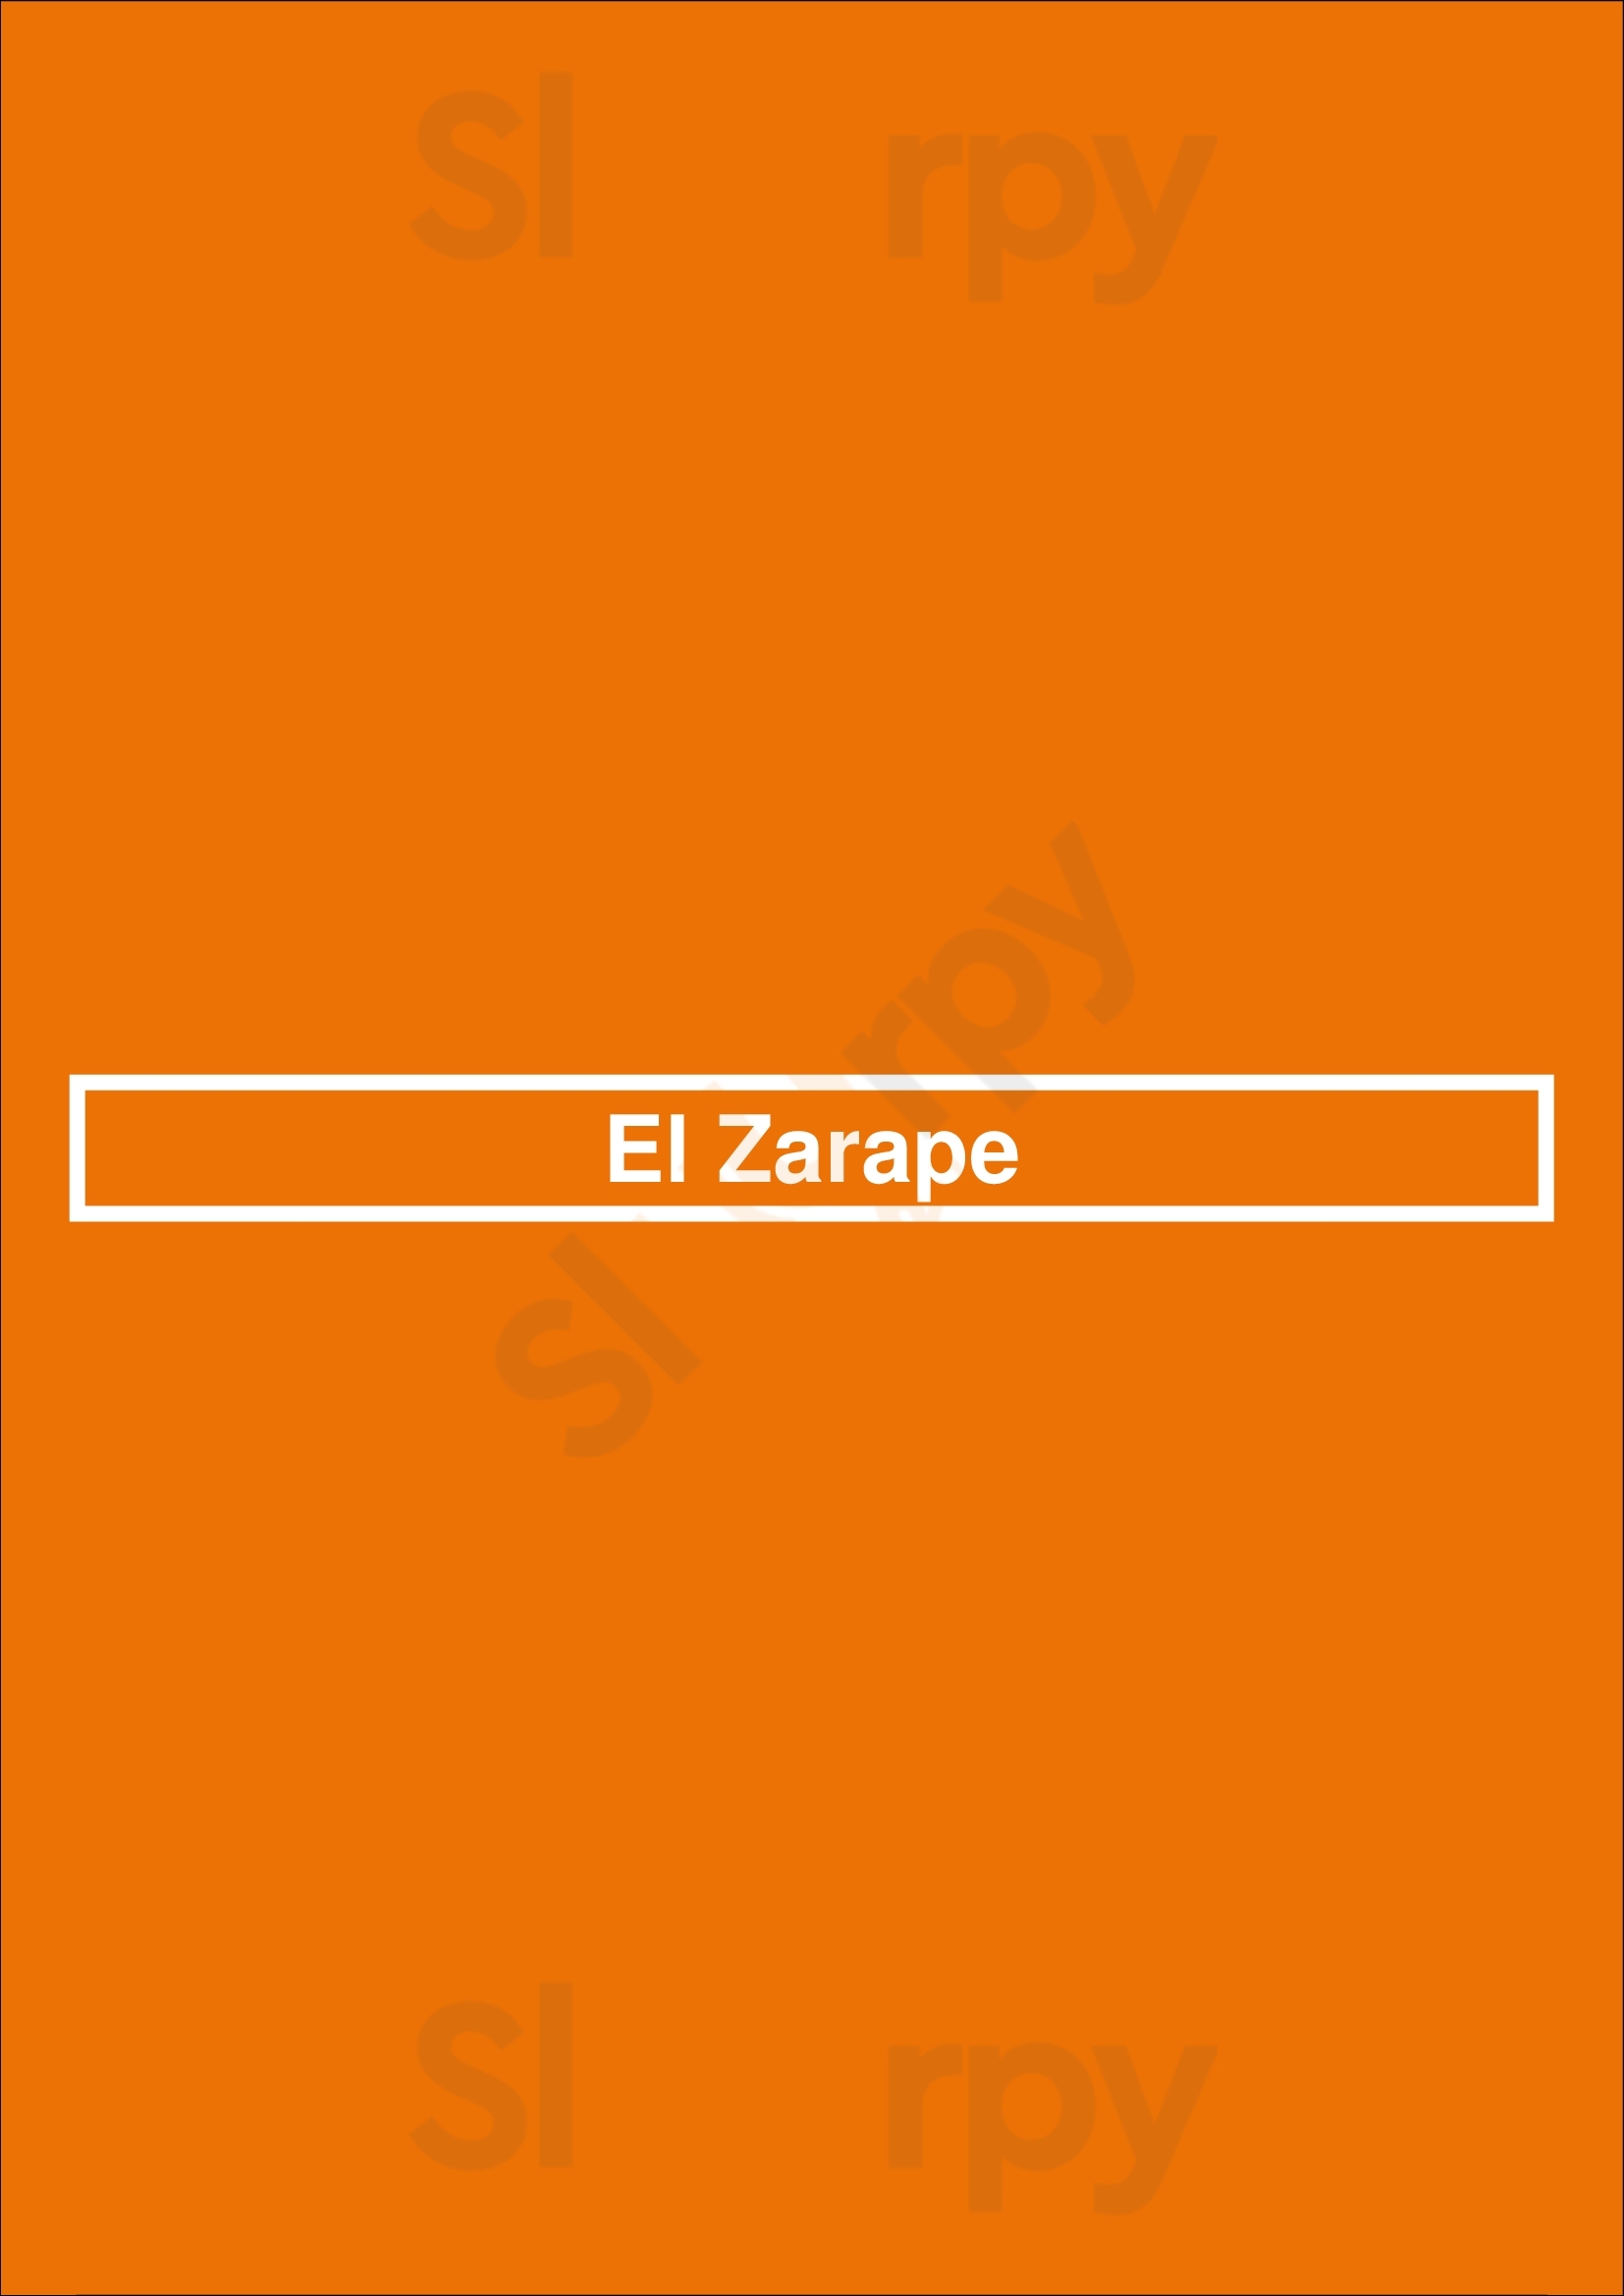 El Zarape Melrose Los Angeles Menu - 1